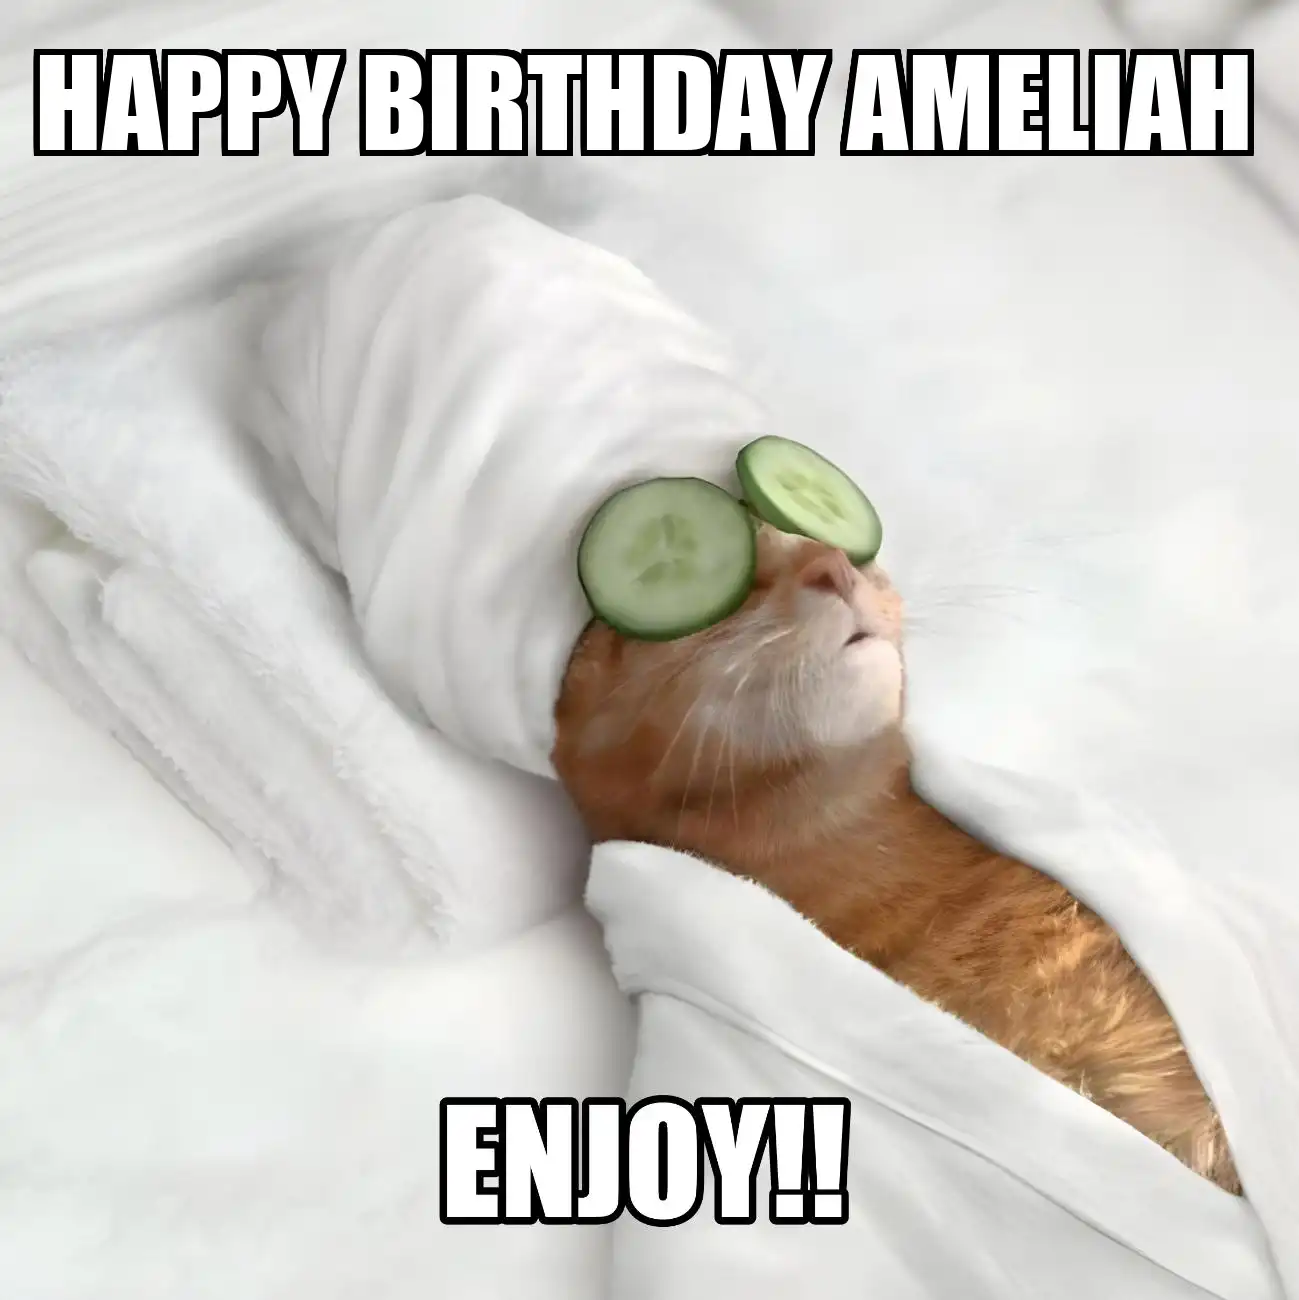 Happy Birthday Ameliah Enjoy Cat Meme